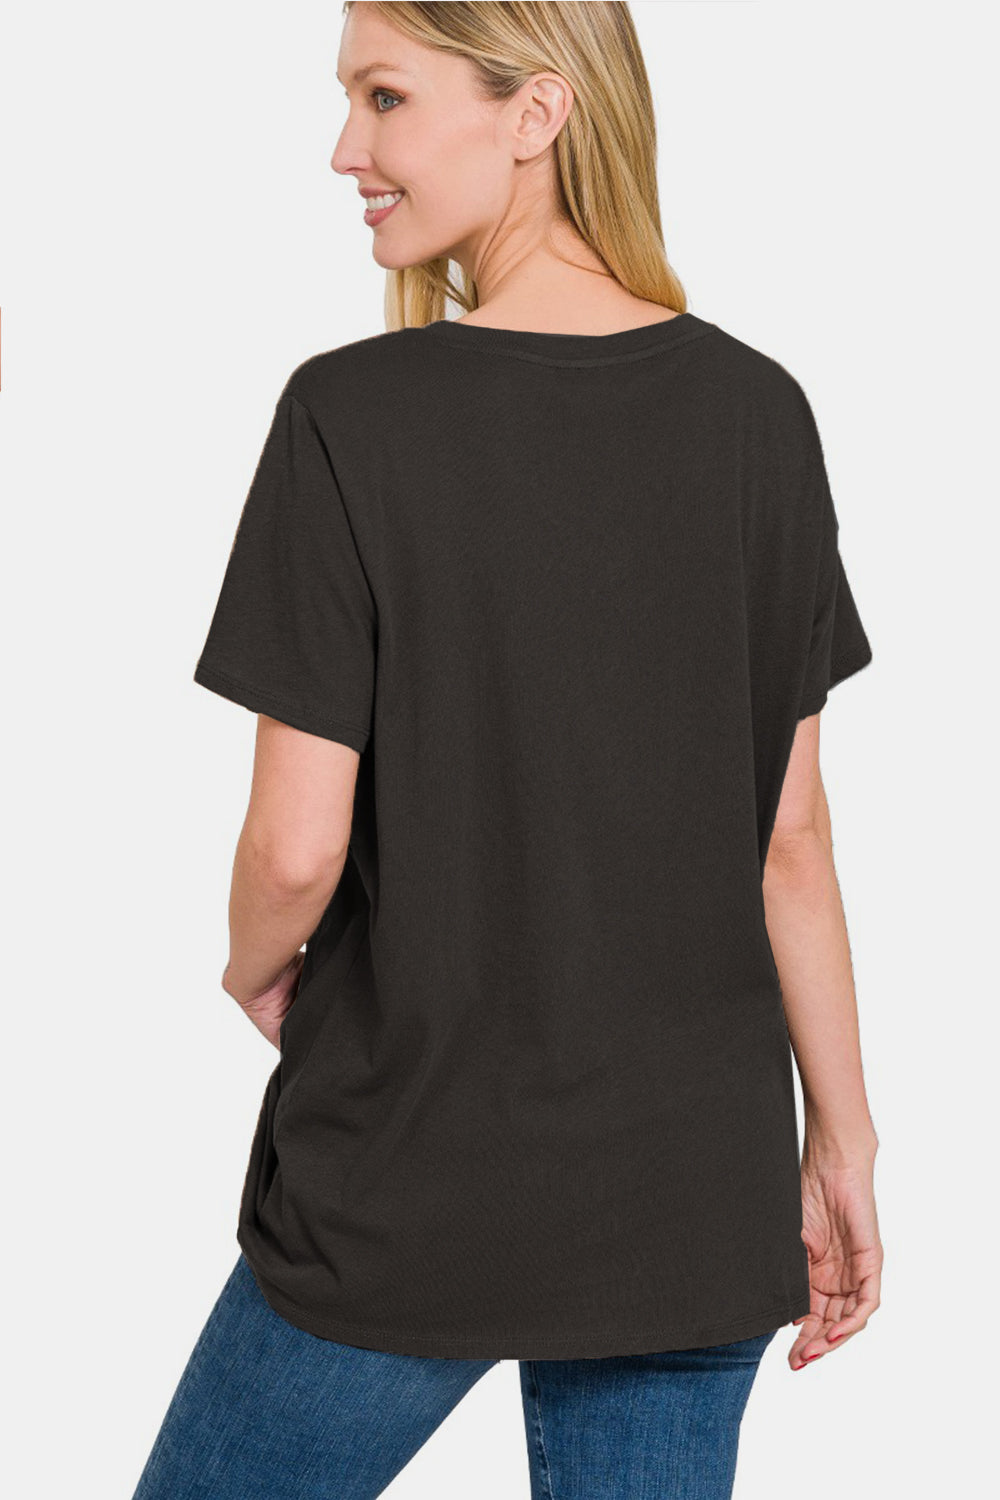 Zenana Full Size V-Neck Short Sleeve T-Shirt - Three Bears Boutique